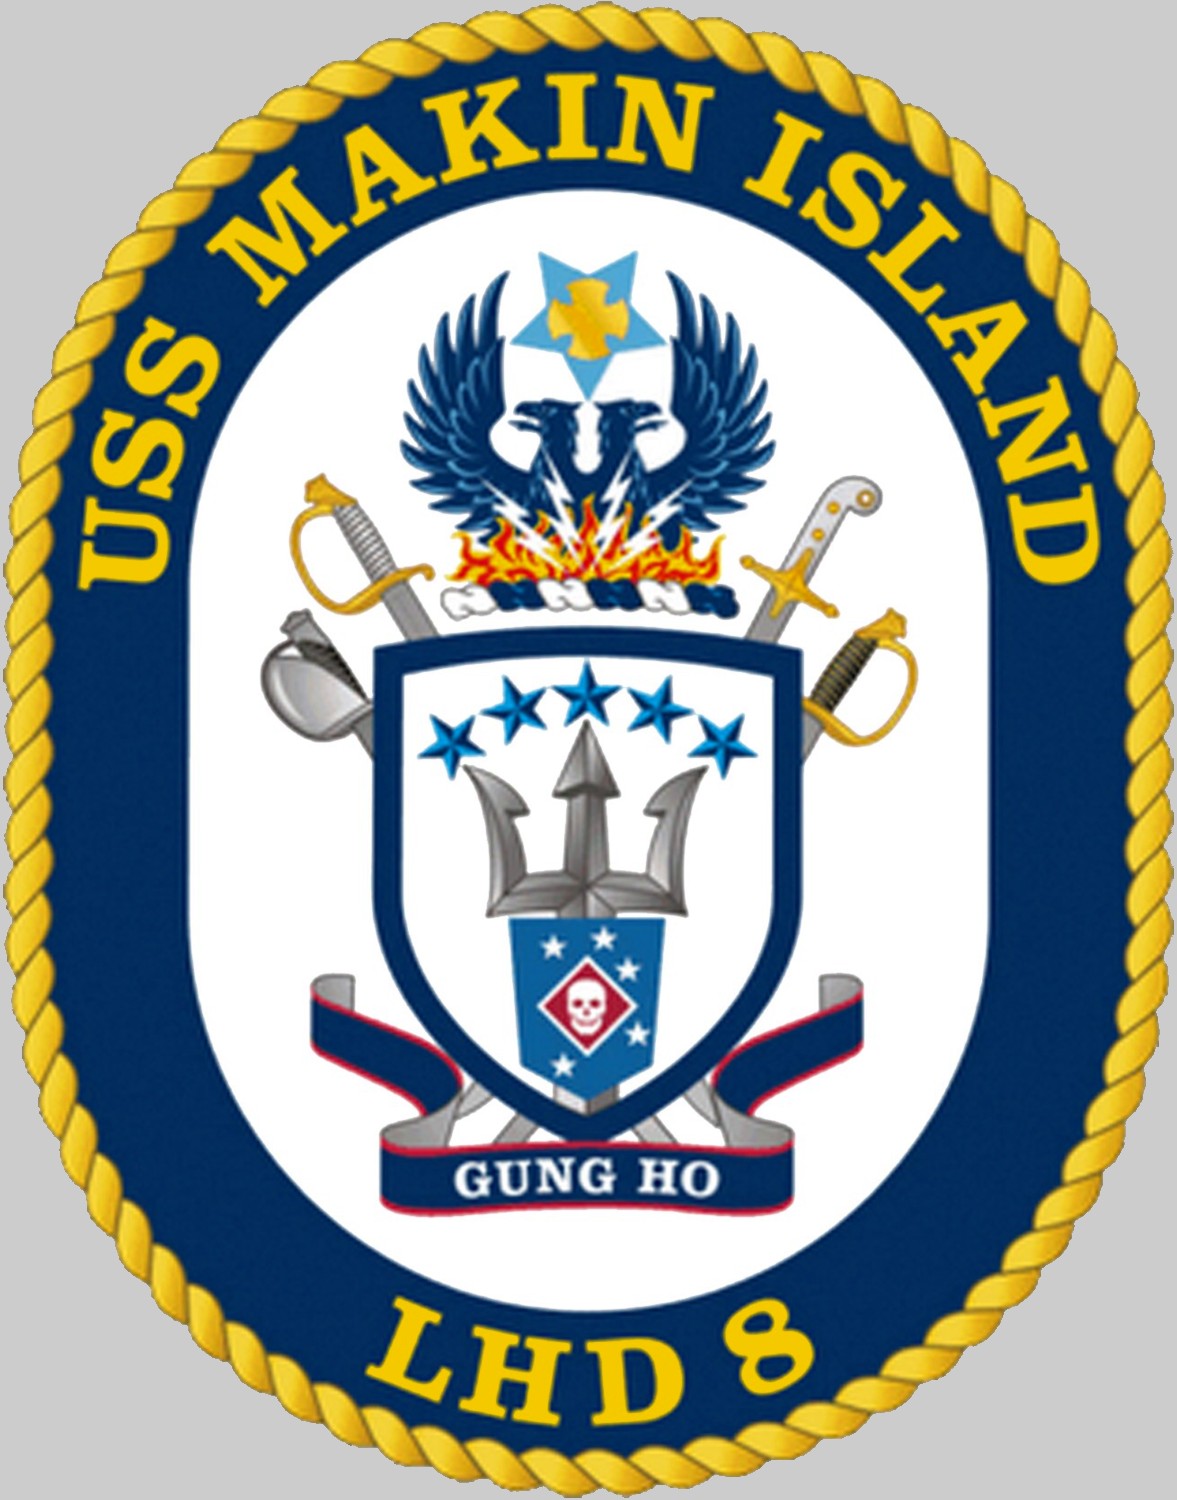 lhd-8 uss makin island insignia crest patch badge amphibious assault ship landing helicopter dock us navy 02x